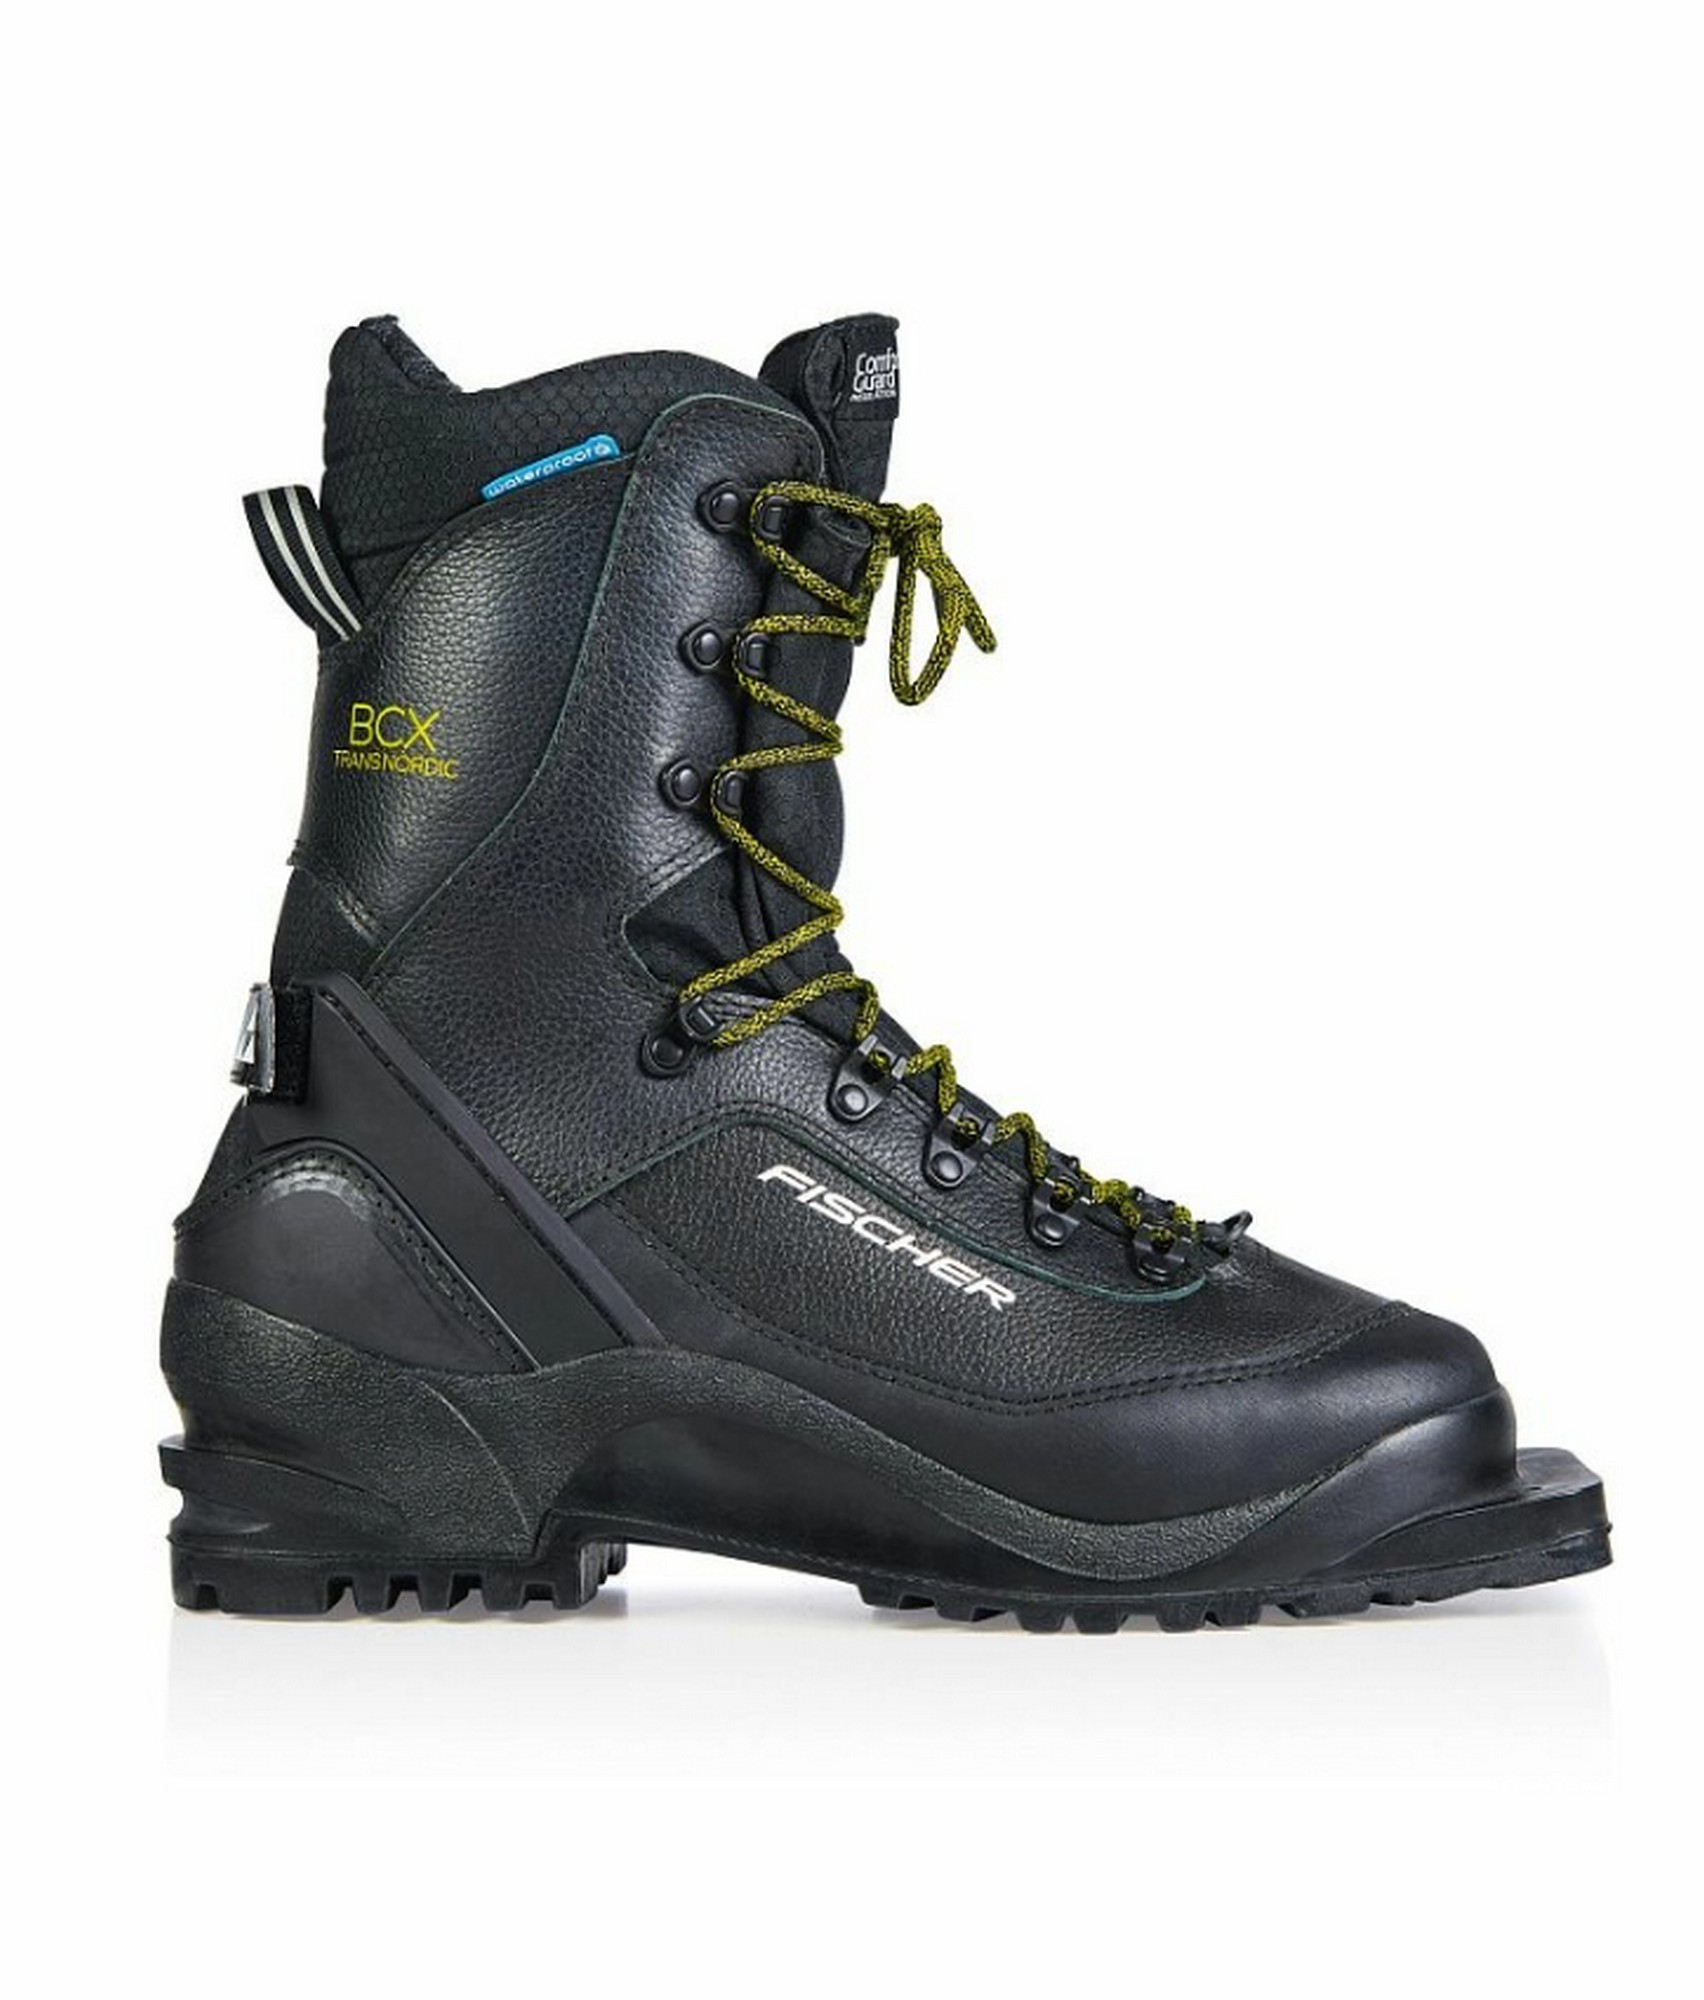 Лыжные ботинки Fischer NNN (BC) BCX Transnordic 75 Waterproof S37721 черный 1704_2000